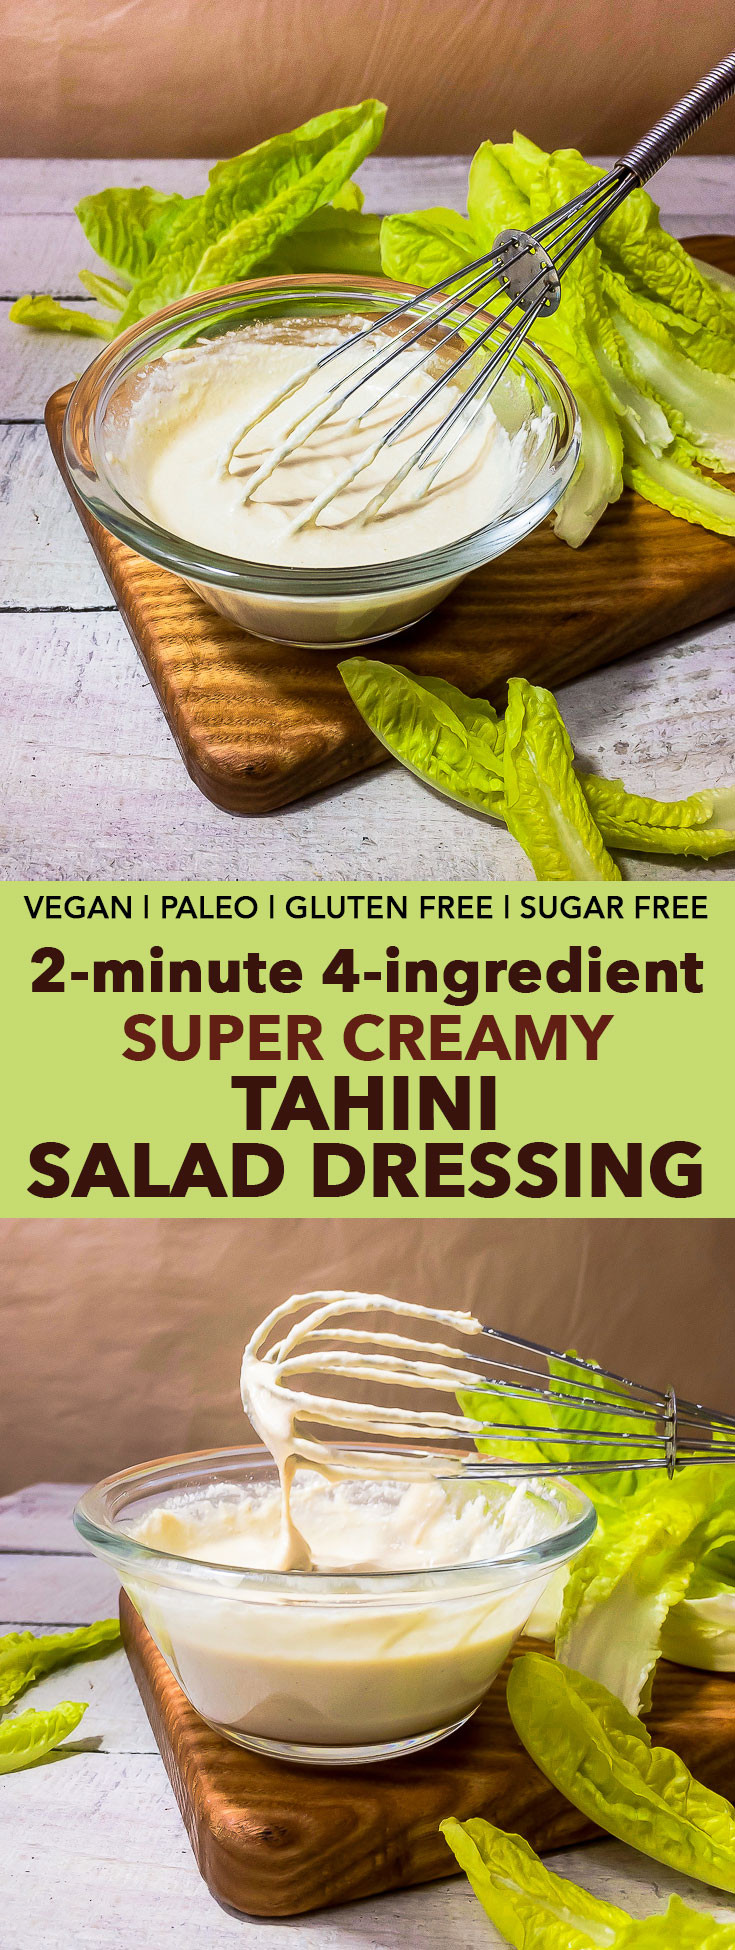 Zaxby'S Salad Dressings
 2 Minute 4 Ingre nt Super Creamy Tahini Salad Dressing